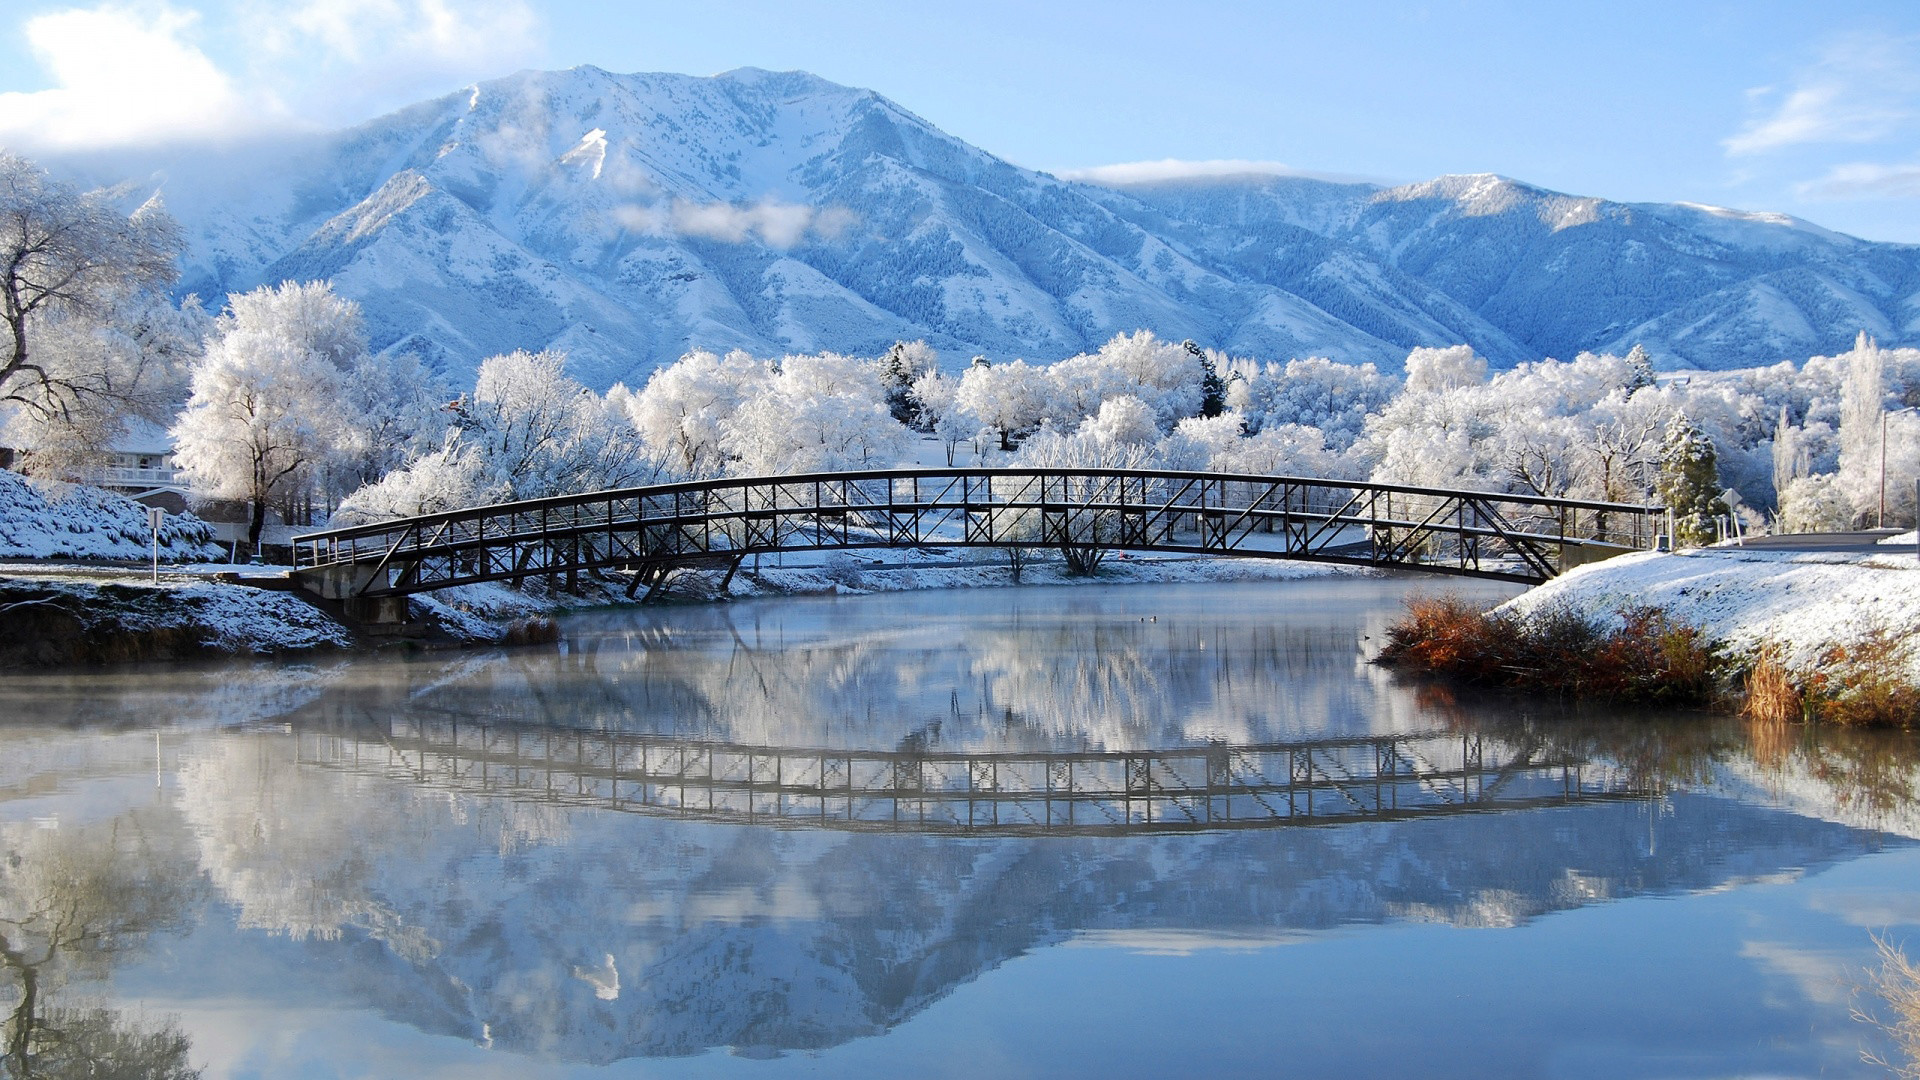 1920x1080 Beautiful Winter Mountain Lake Bridge Scenes for Desktop Wallpapers